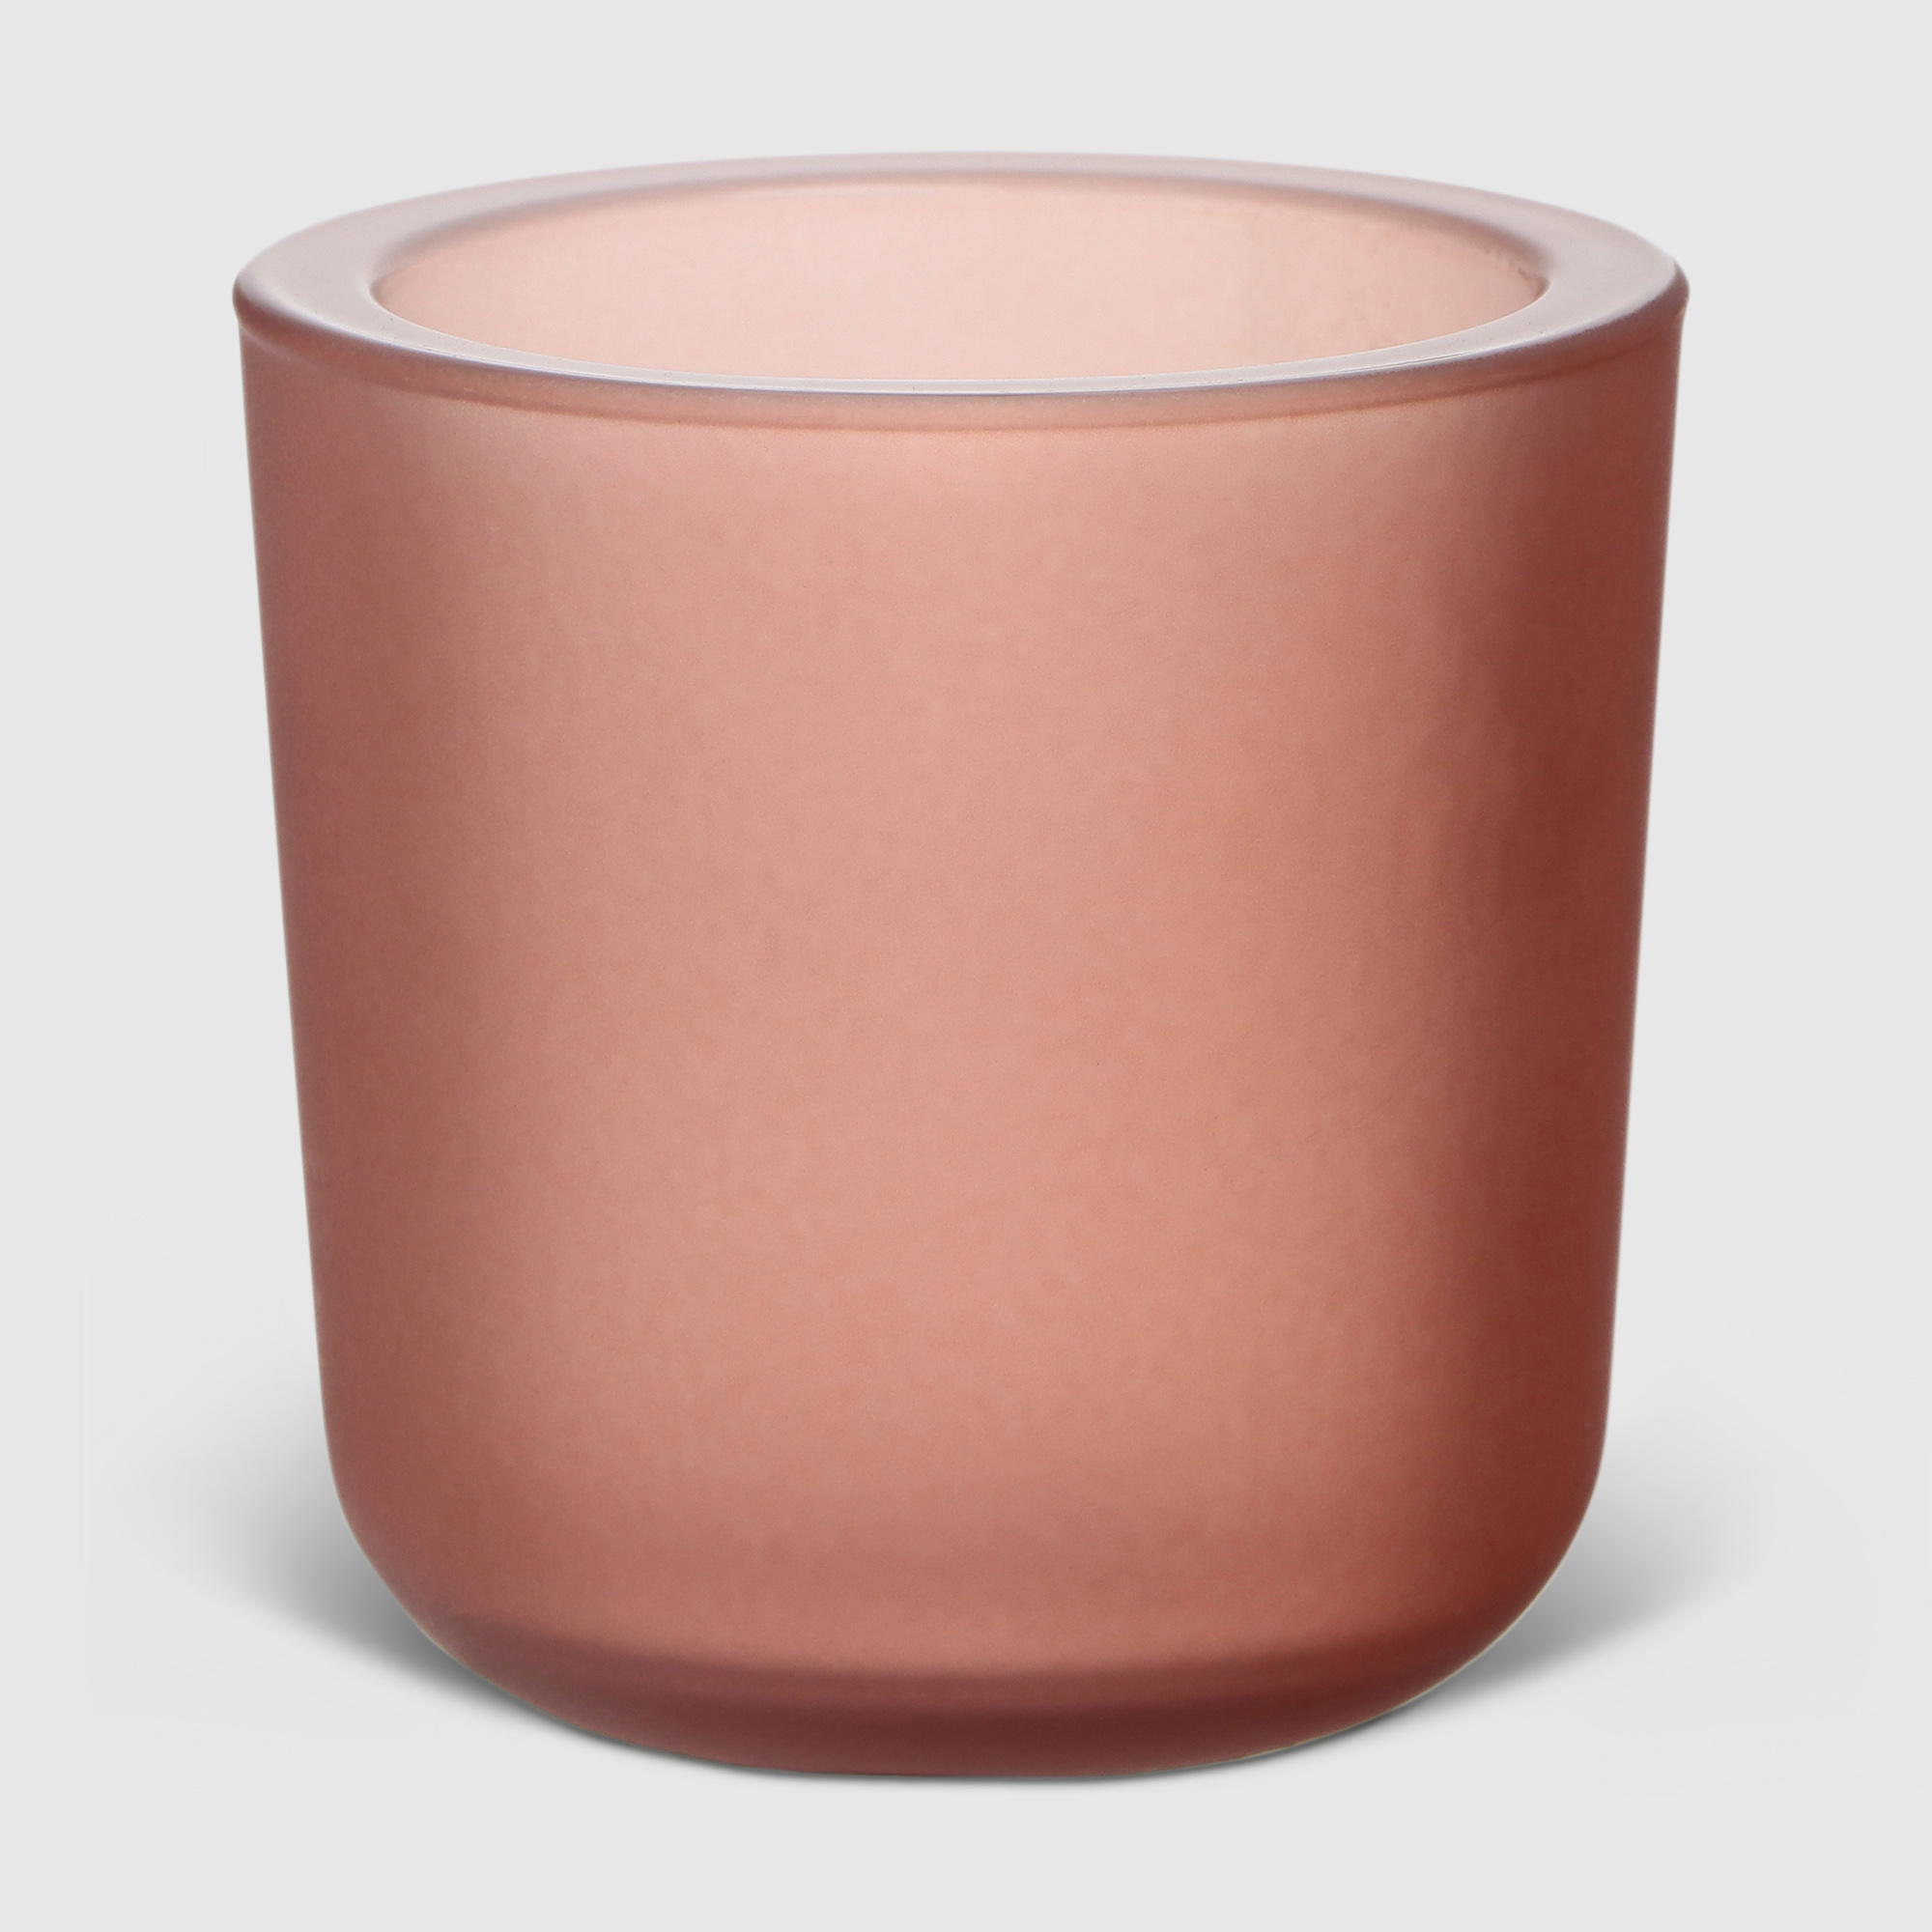 Ваза Hakbijl glass Yannik Розовая 8х8 см ваза коническая hakbijl glass conical 50см